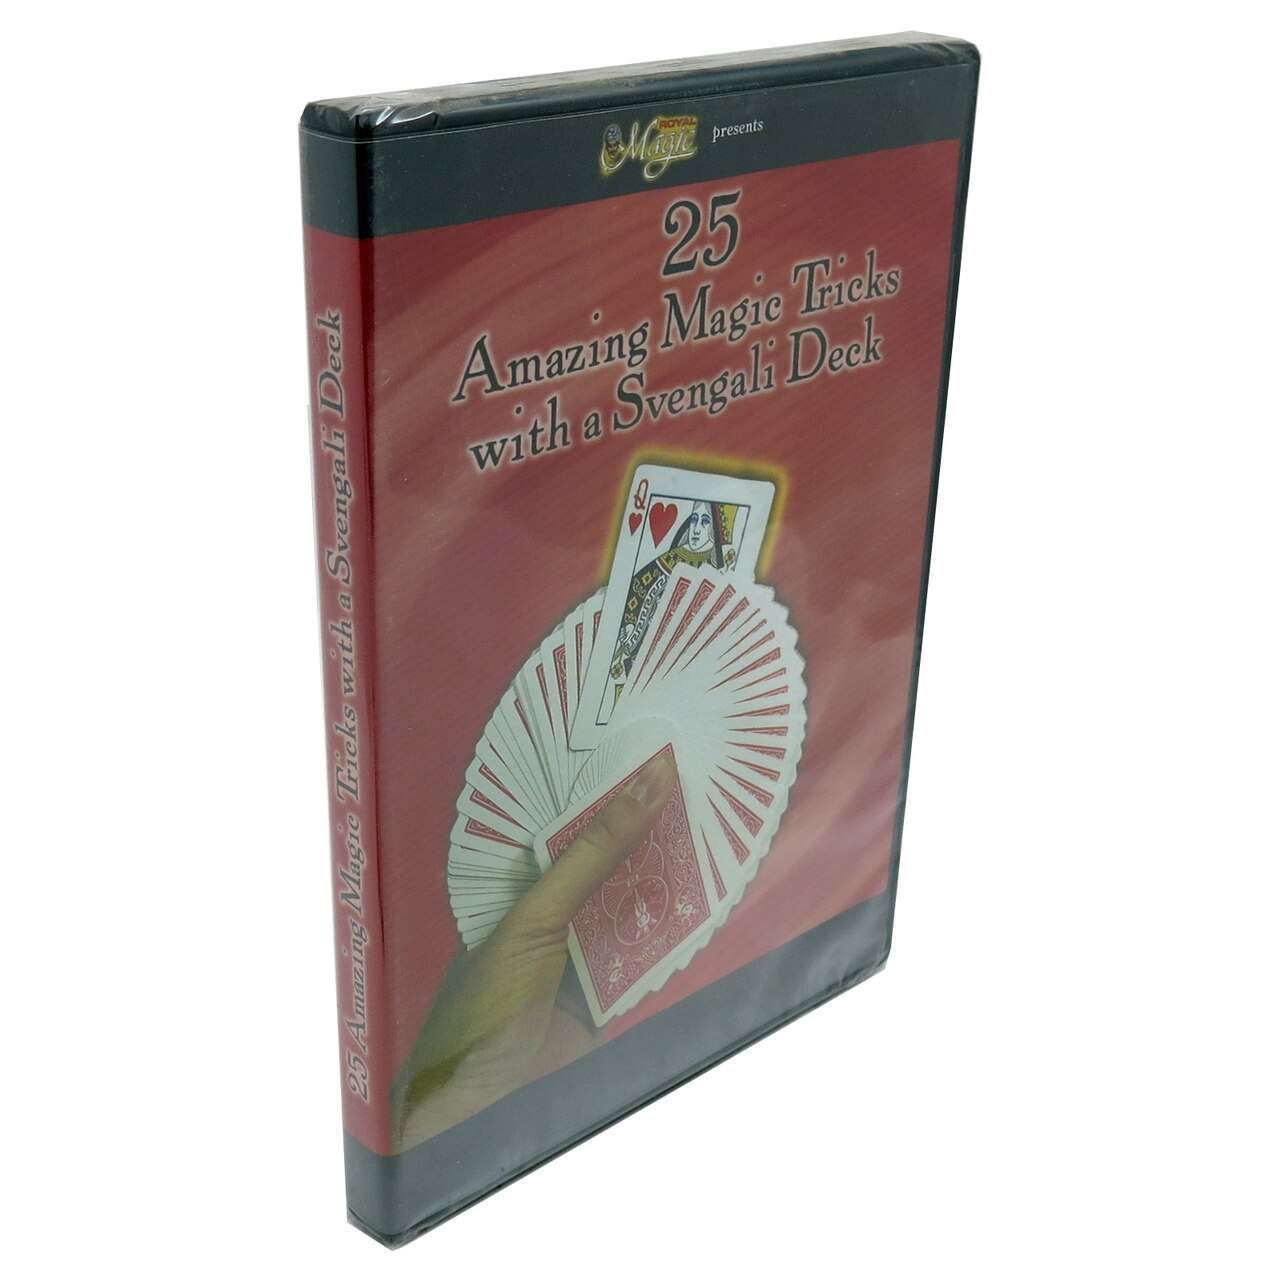 Amazing Magic Tricks with Svengali Deck DVD^